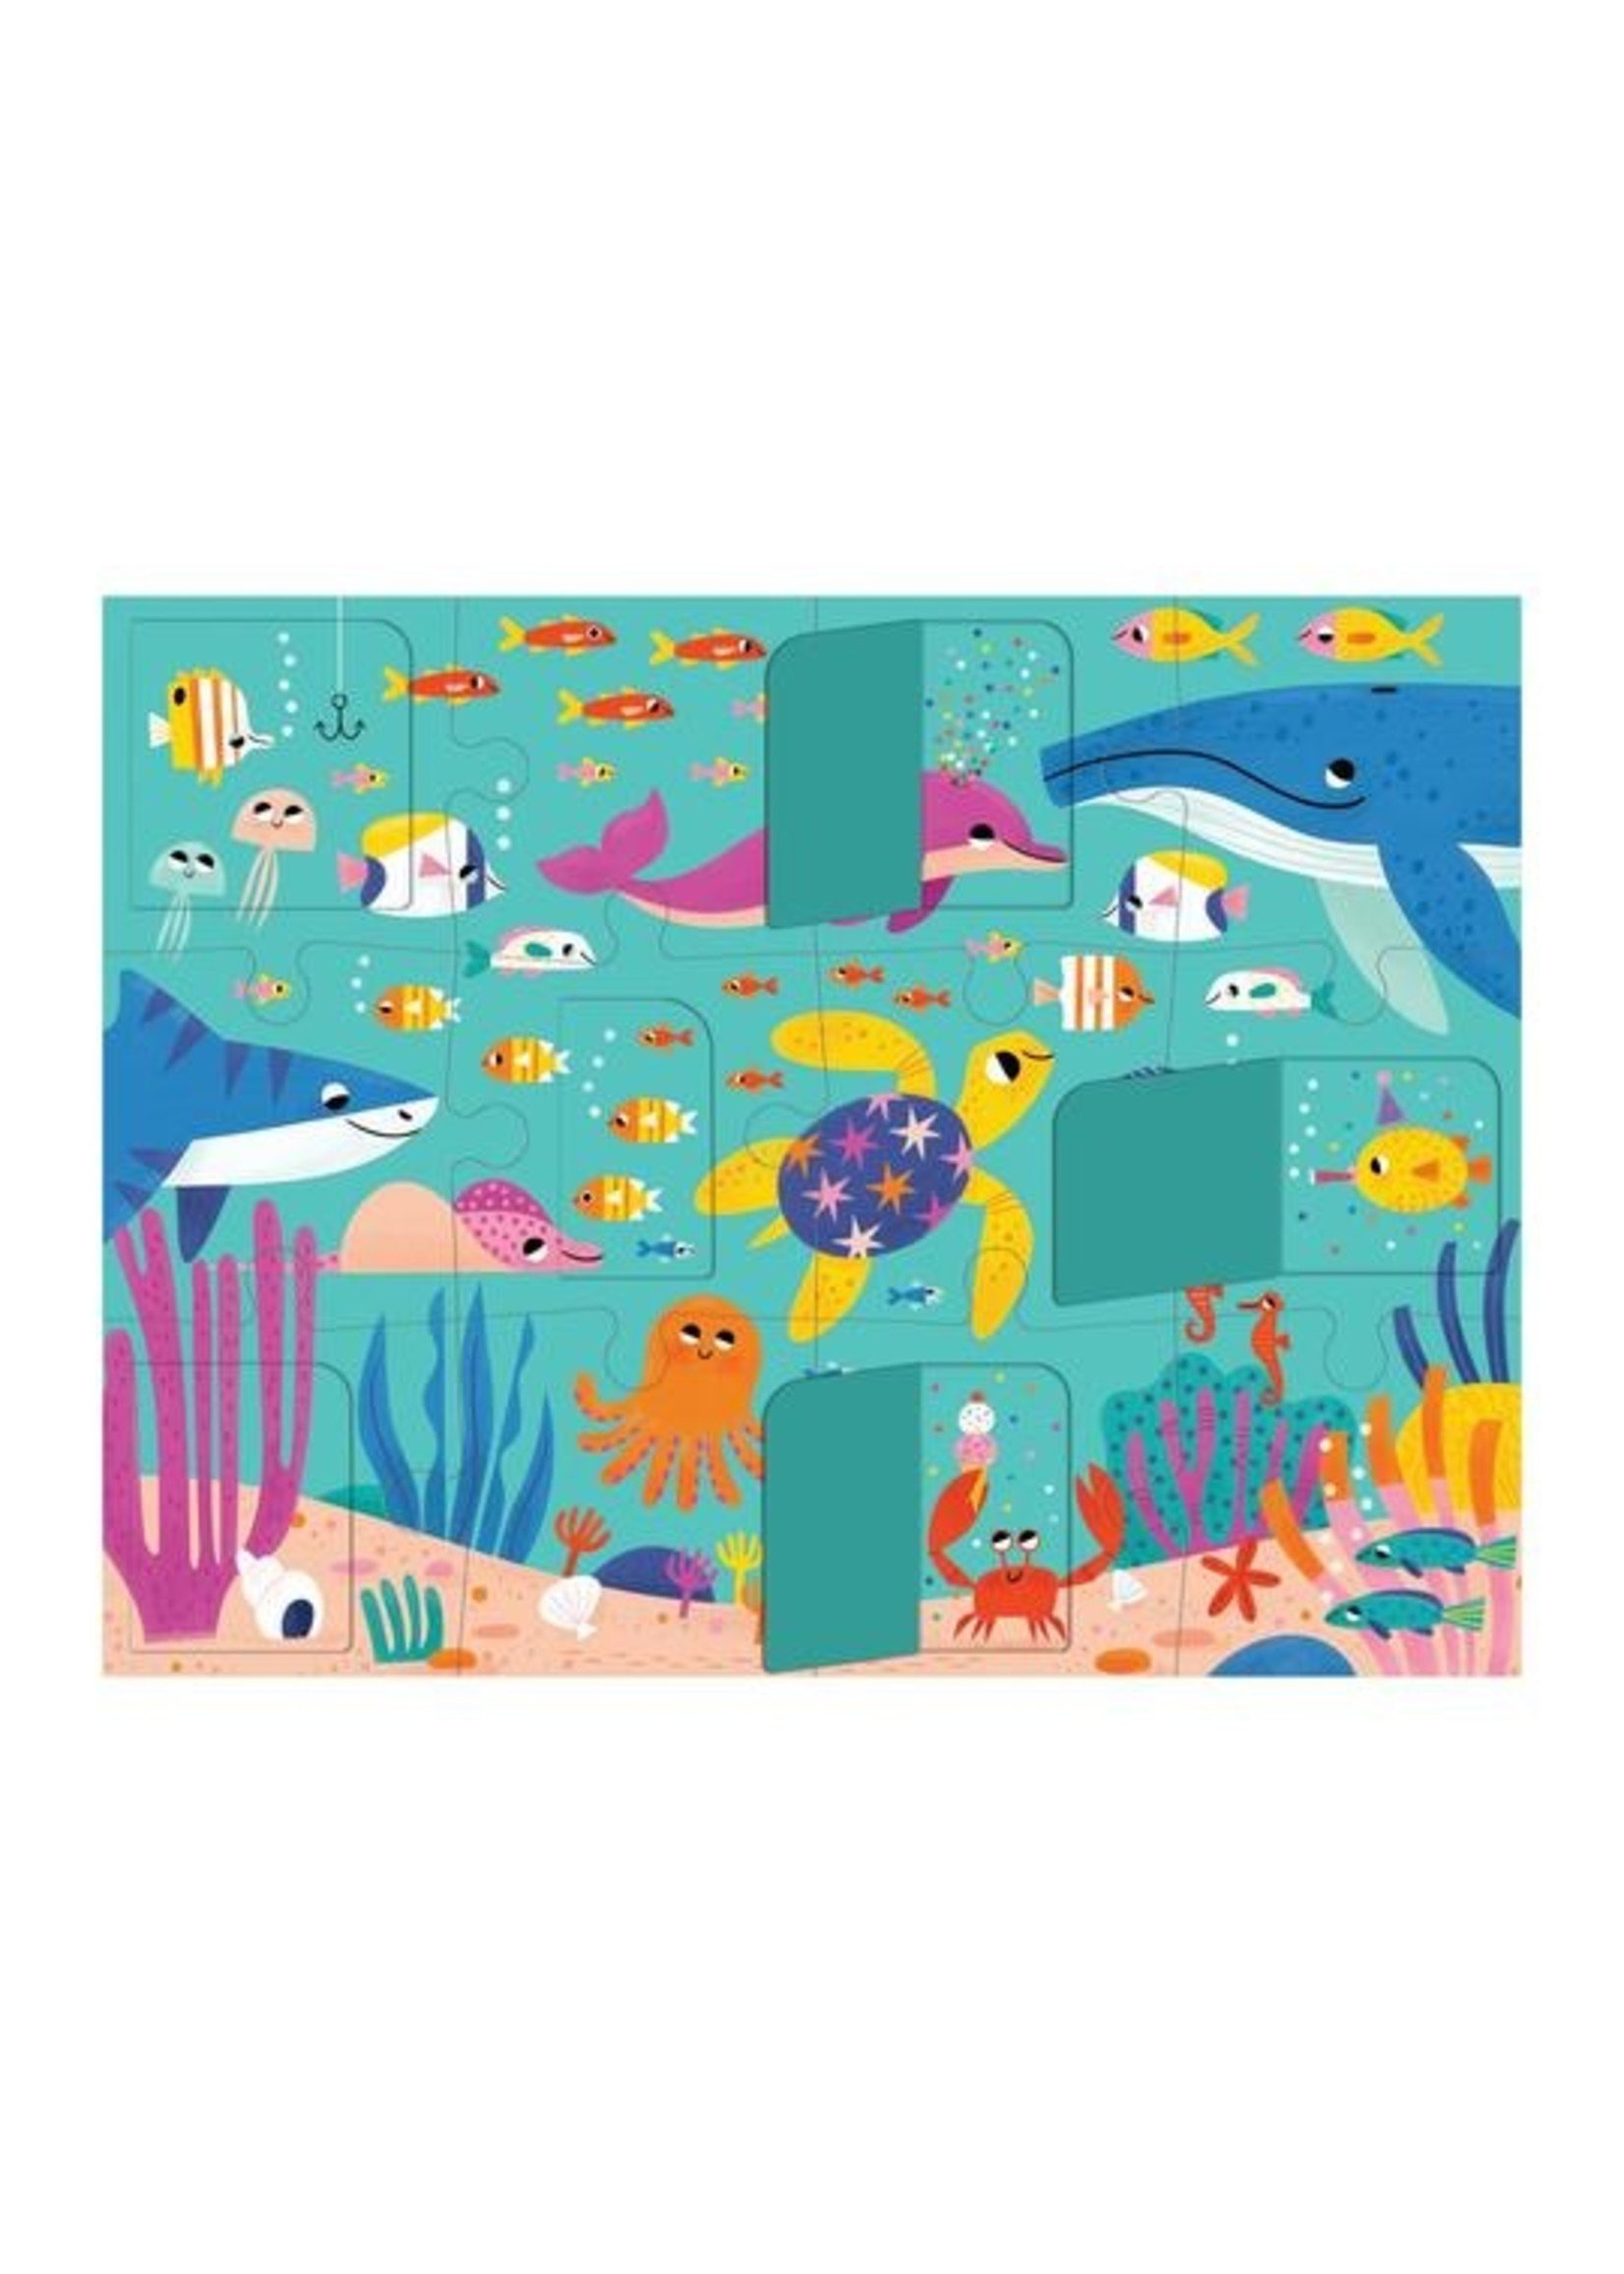 Mudpuppy "Ocean Party" Lift-the-Flap 12 Piece Puzzle